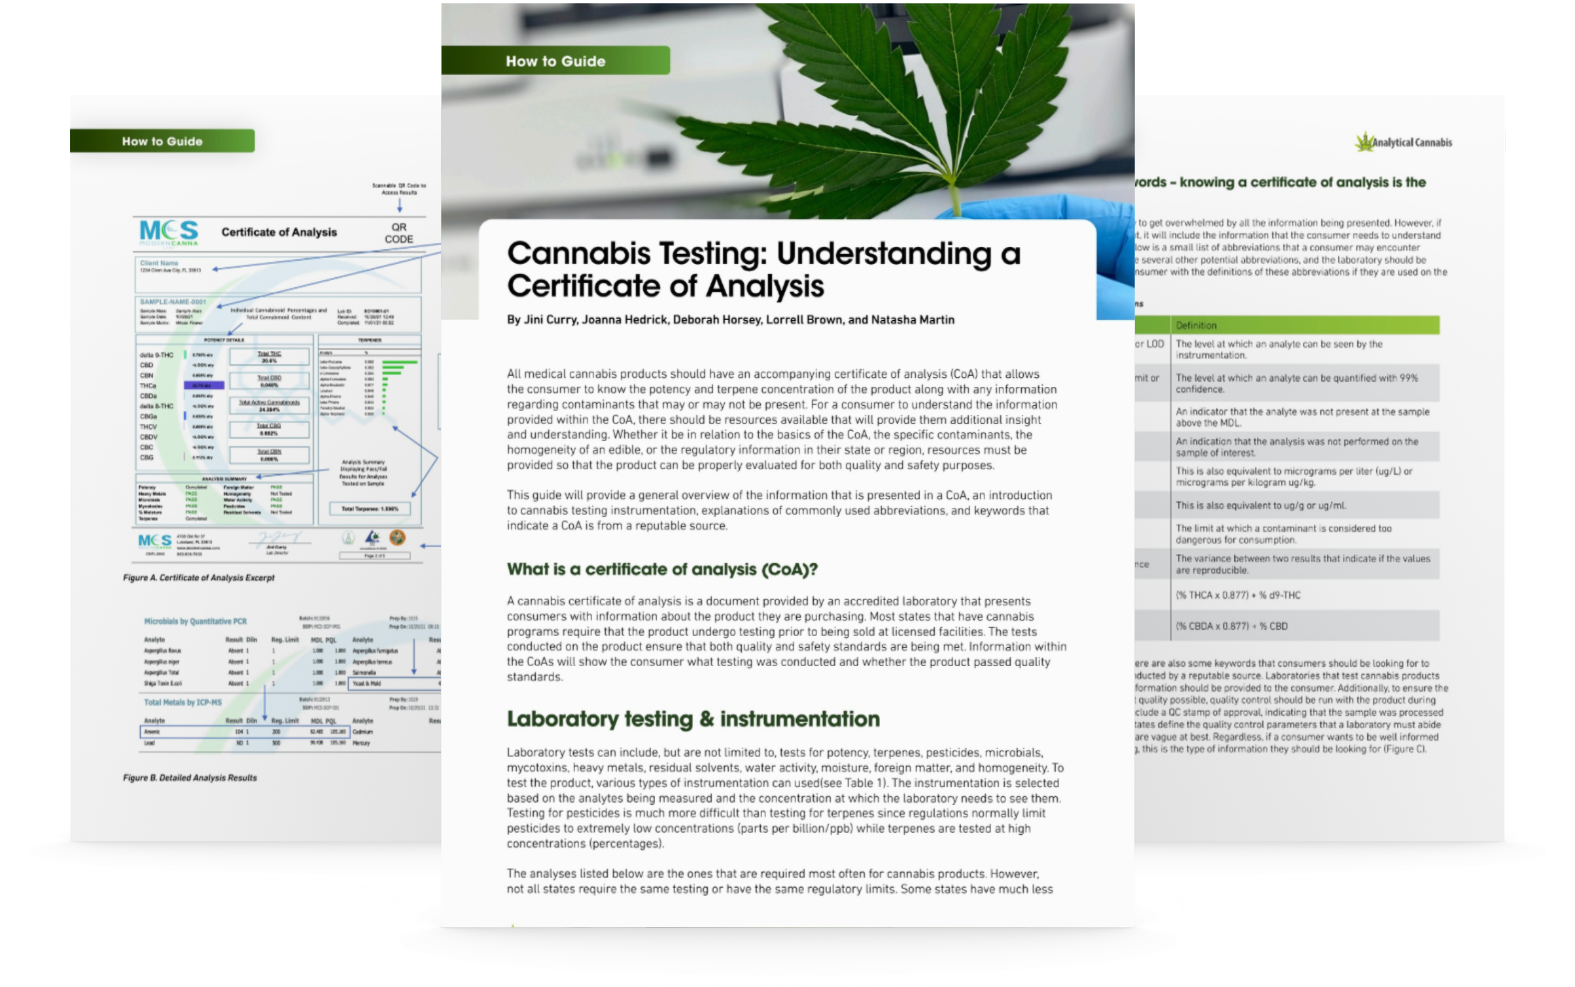 CannabisTesting_CertificateOfAnalysis_HowToGuide